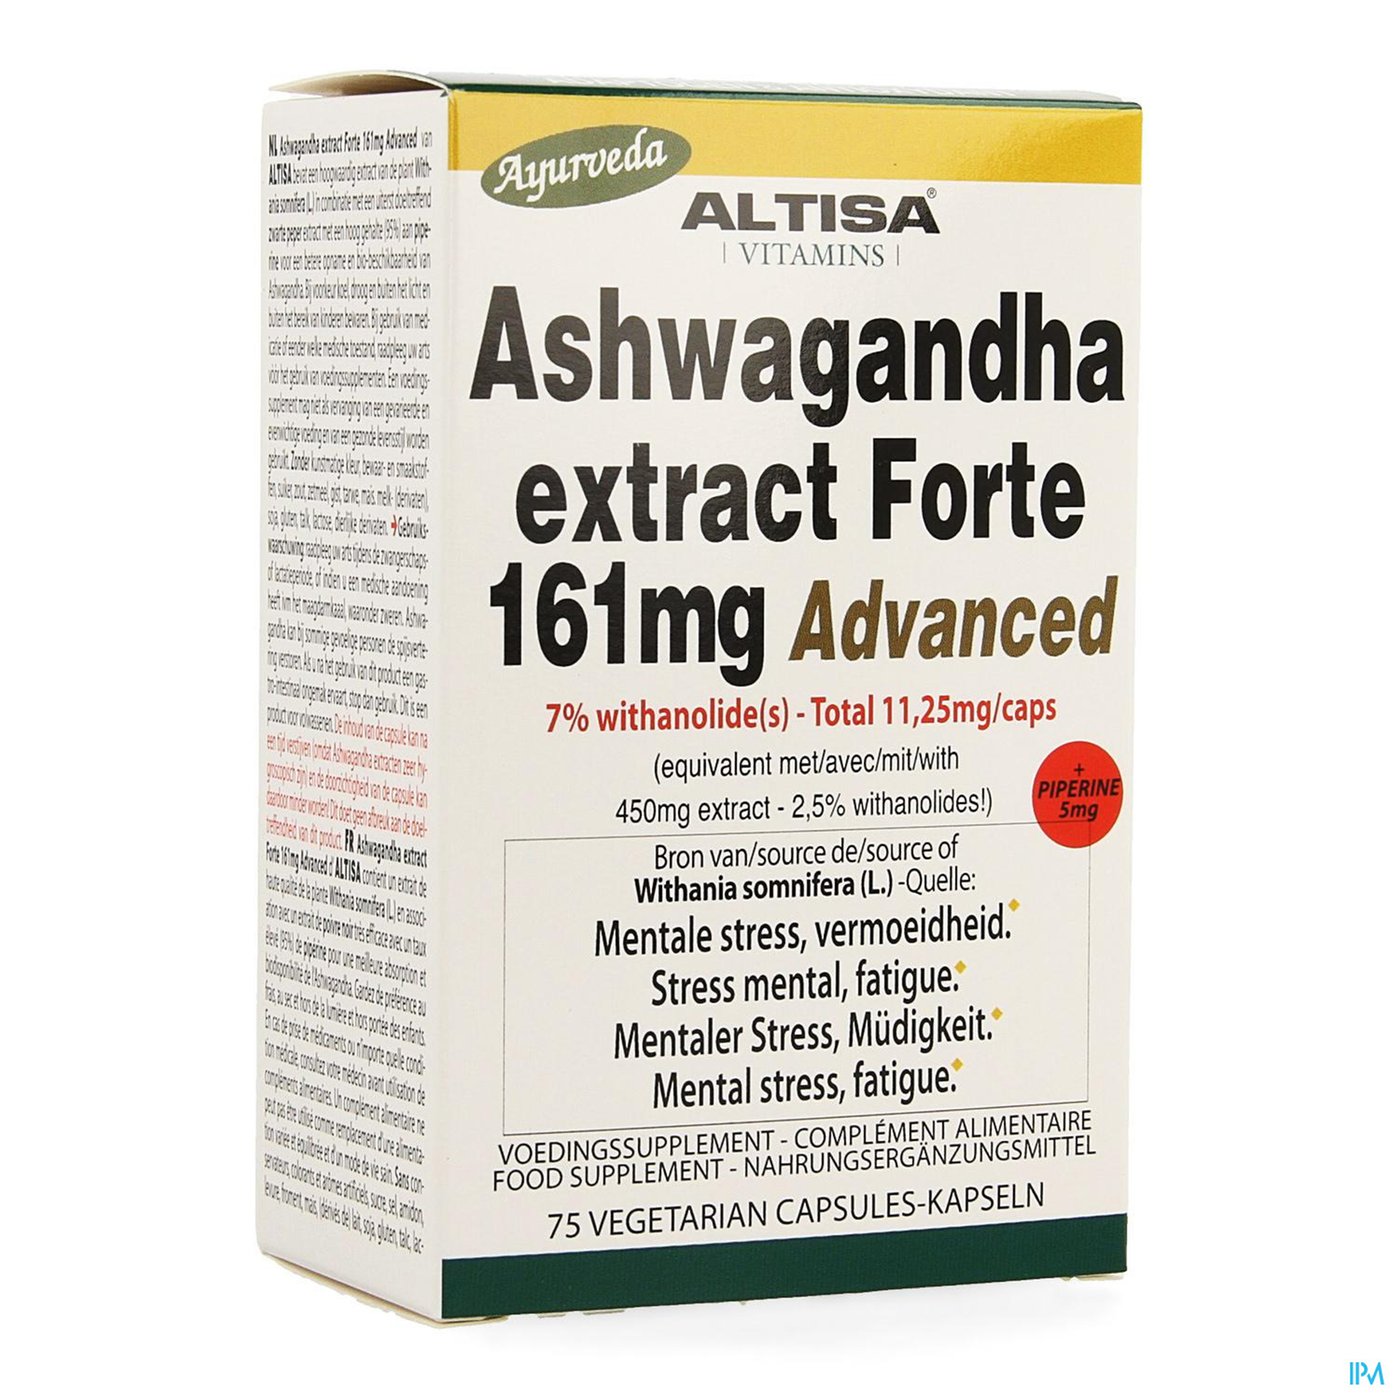 Altisa Ashwagandha Forte 161mg Advanced Caps 75 packshot